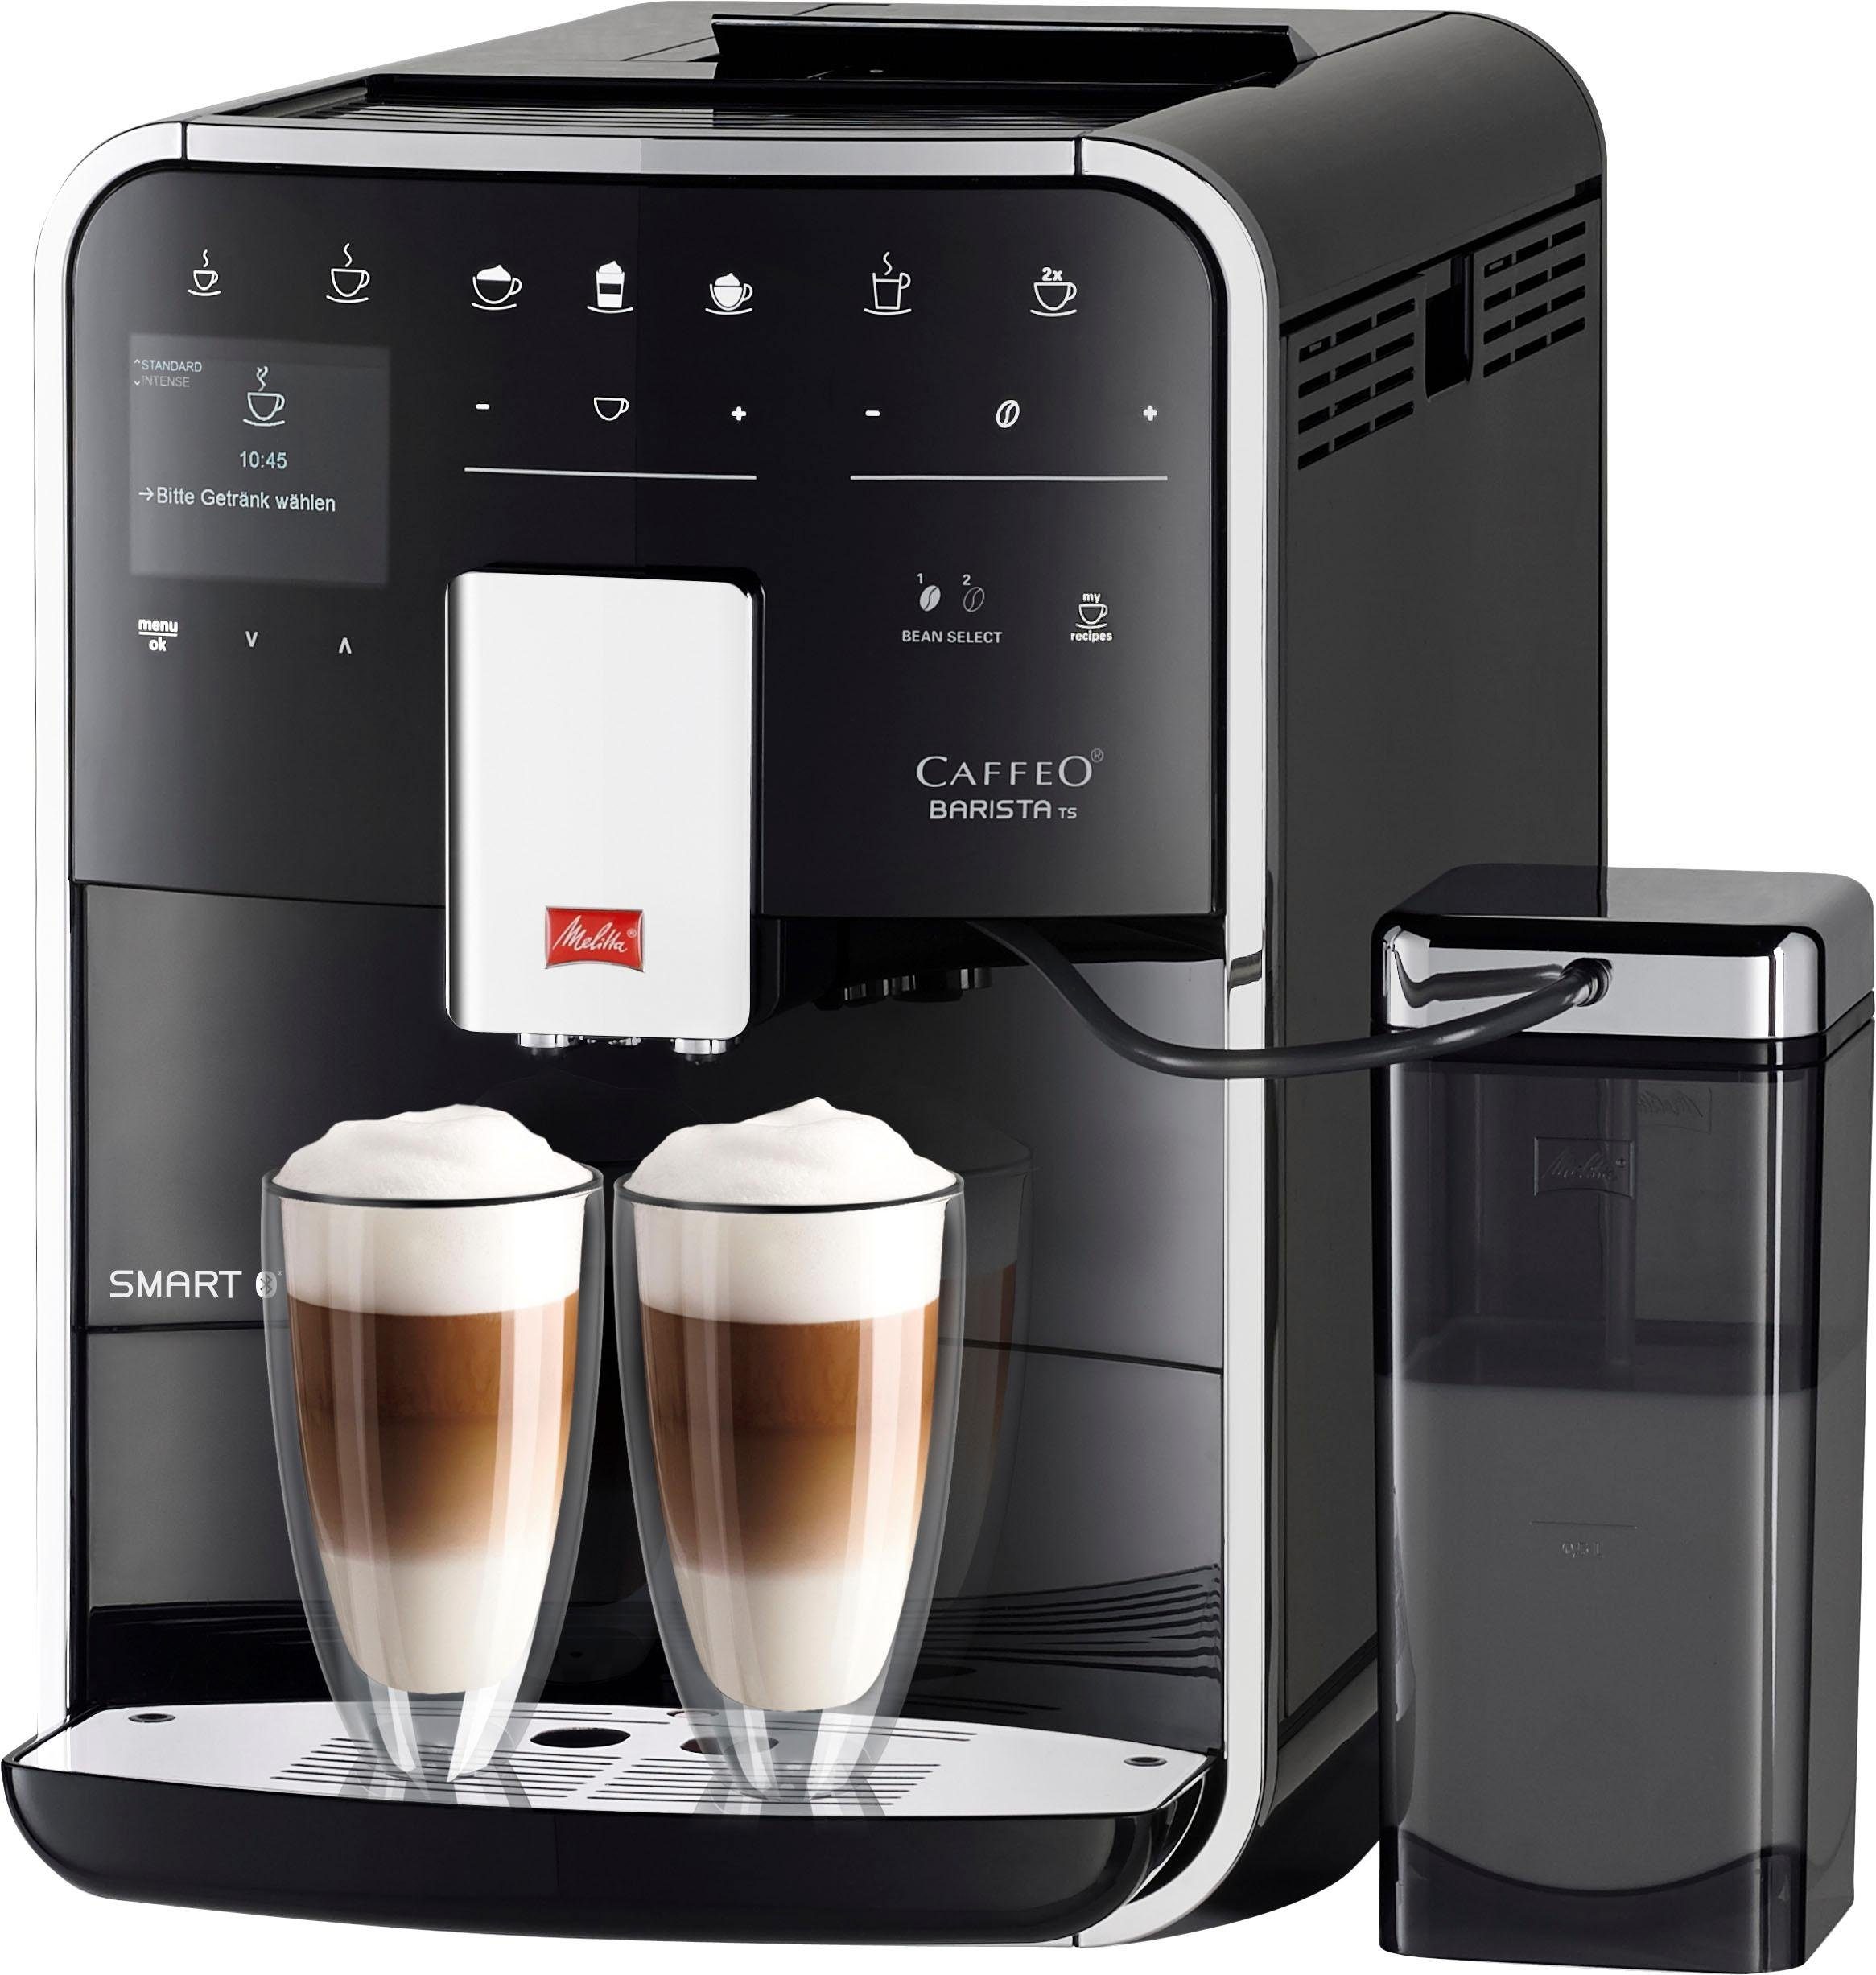 Melitta Kaffeevollautomat Barista TS Smart® F850-102, schwarz, 21  Kaffeerezepte & 8 Benutzerprofile, 2-Kammer